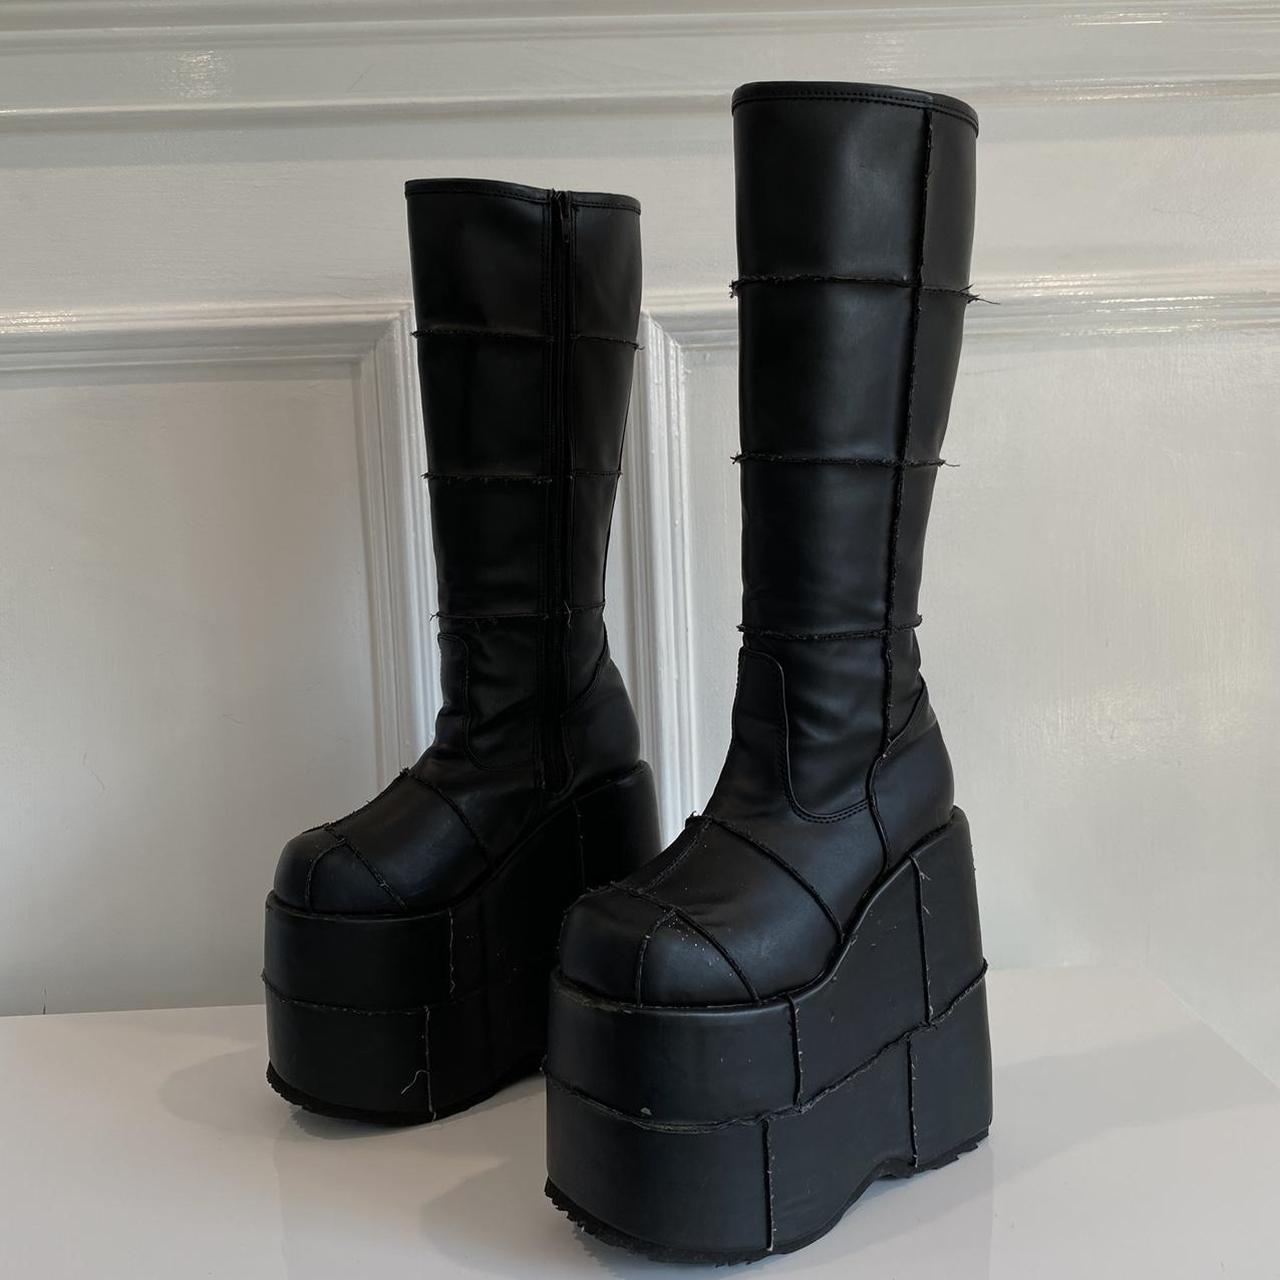 Product Image 4 - Black Demonia platform boots 

Size